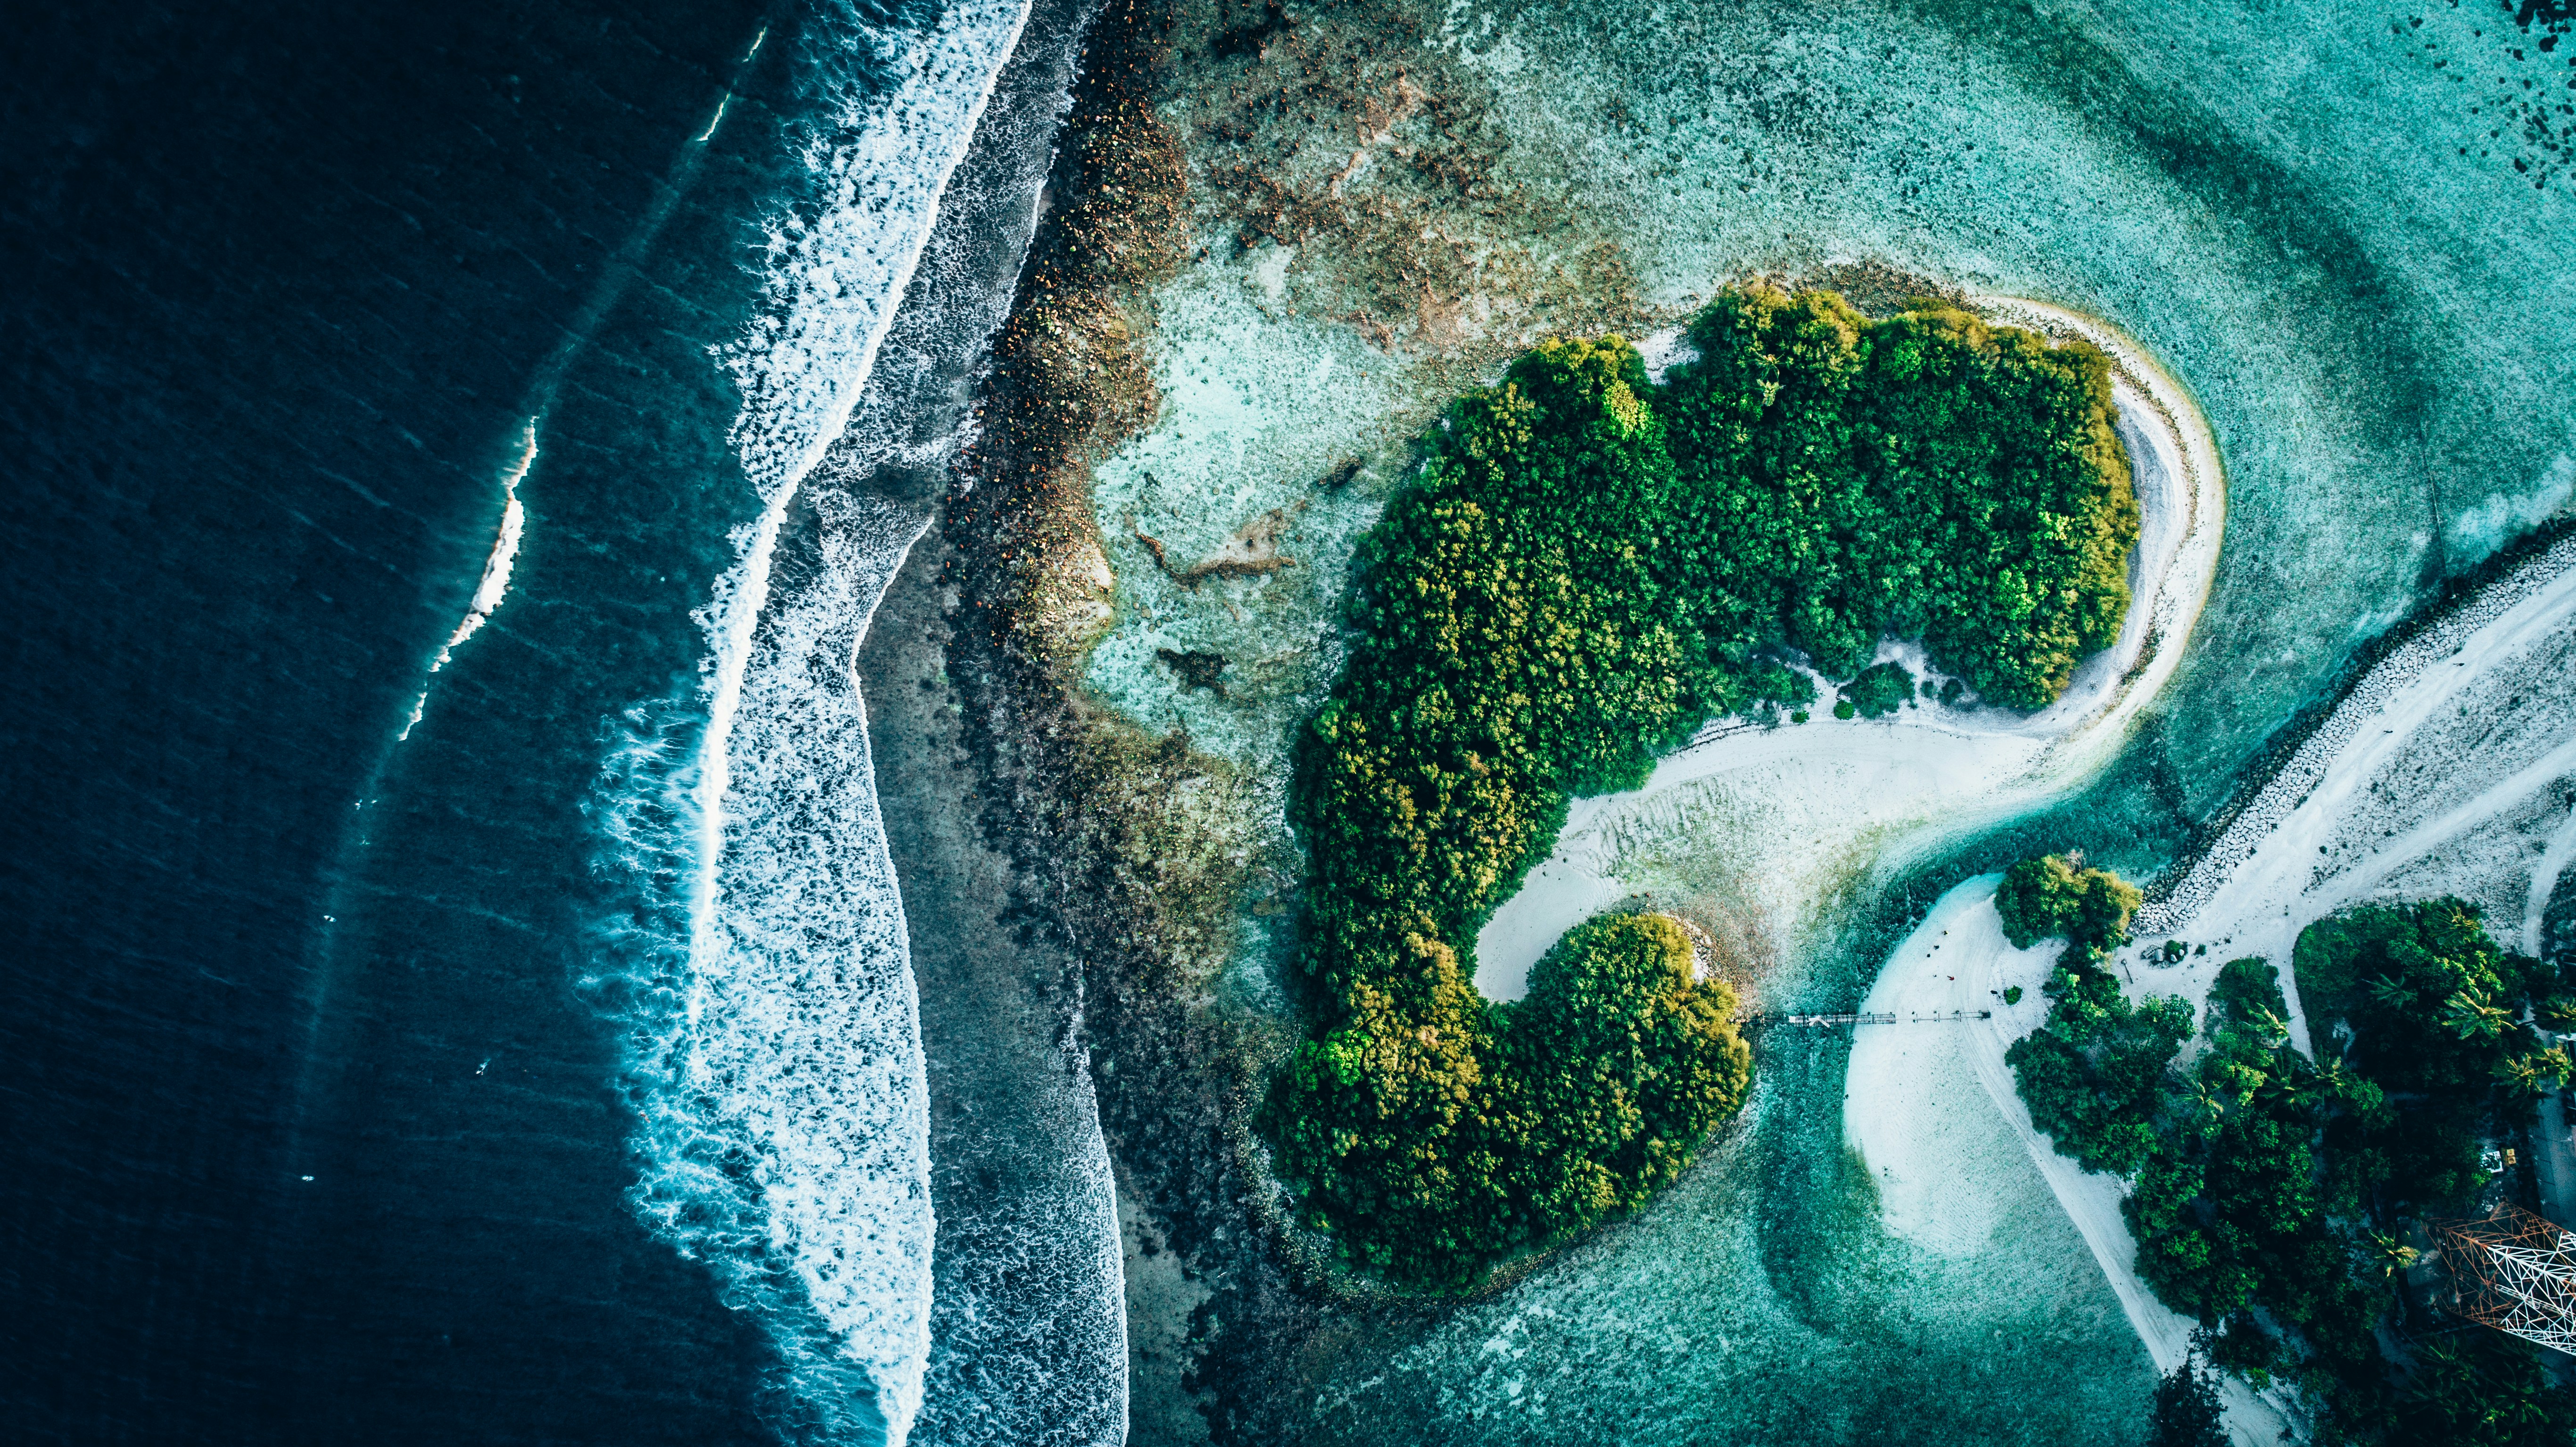 Nature Landscape Water Waves Sea Island Trees Tower Rocks Drone Photo Aerial View Coast Maldives 5464x3070